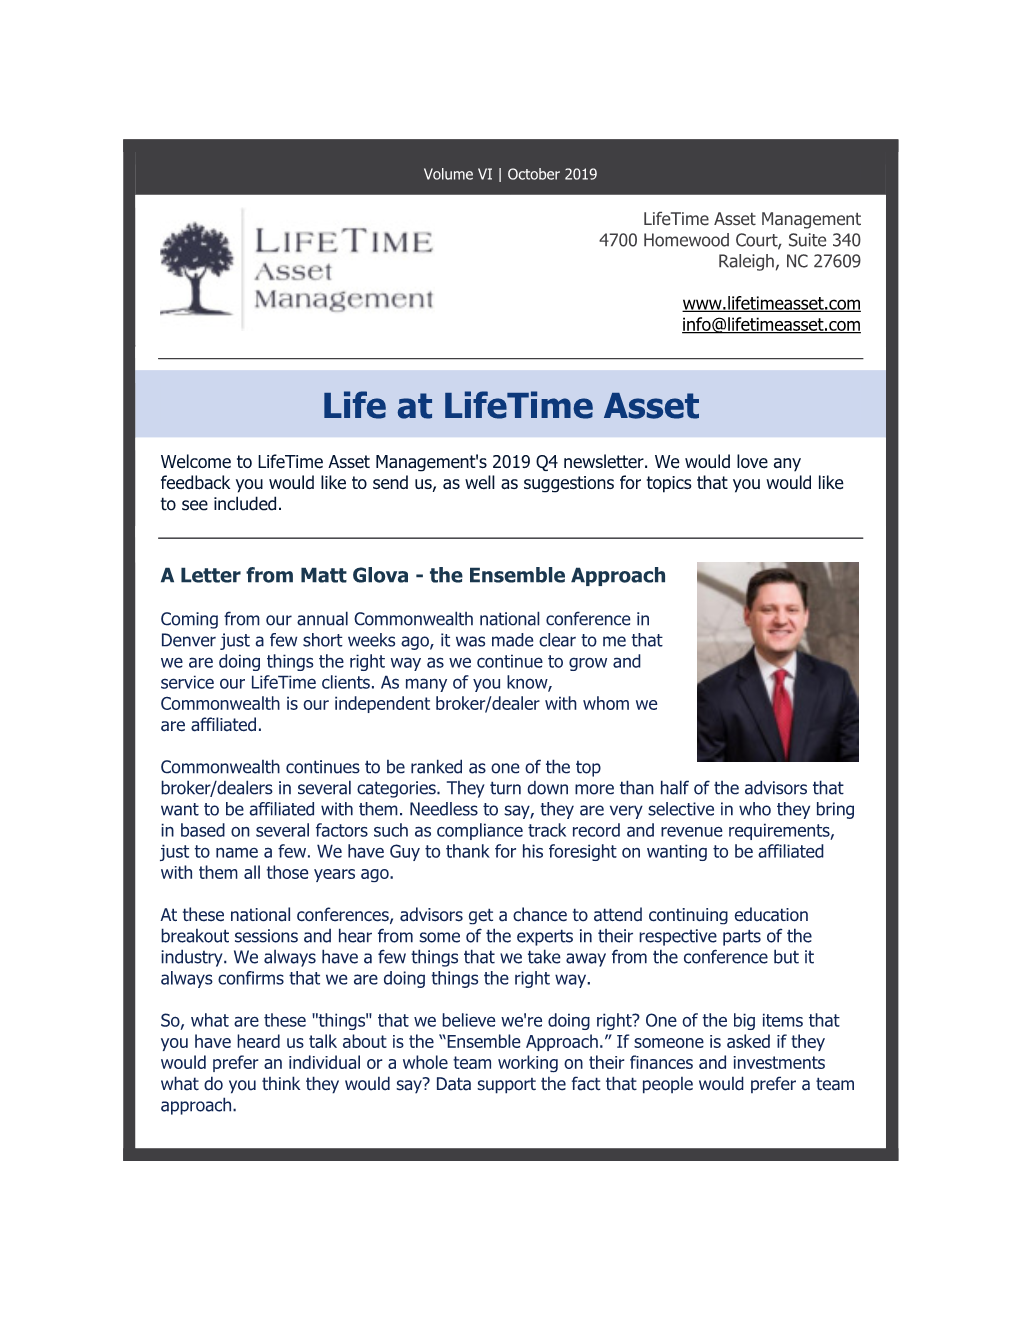 Life at Lifetime Asset